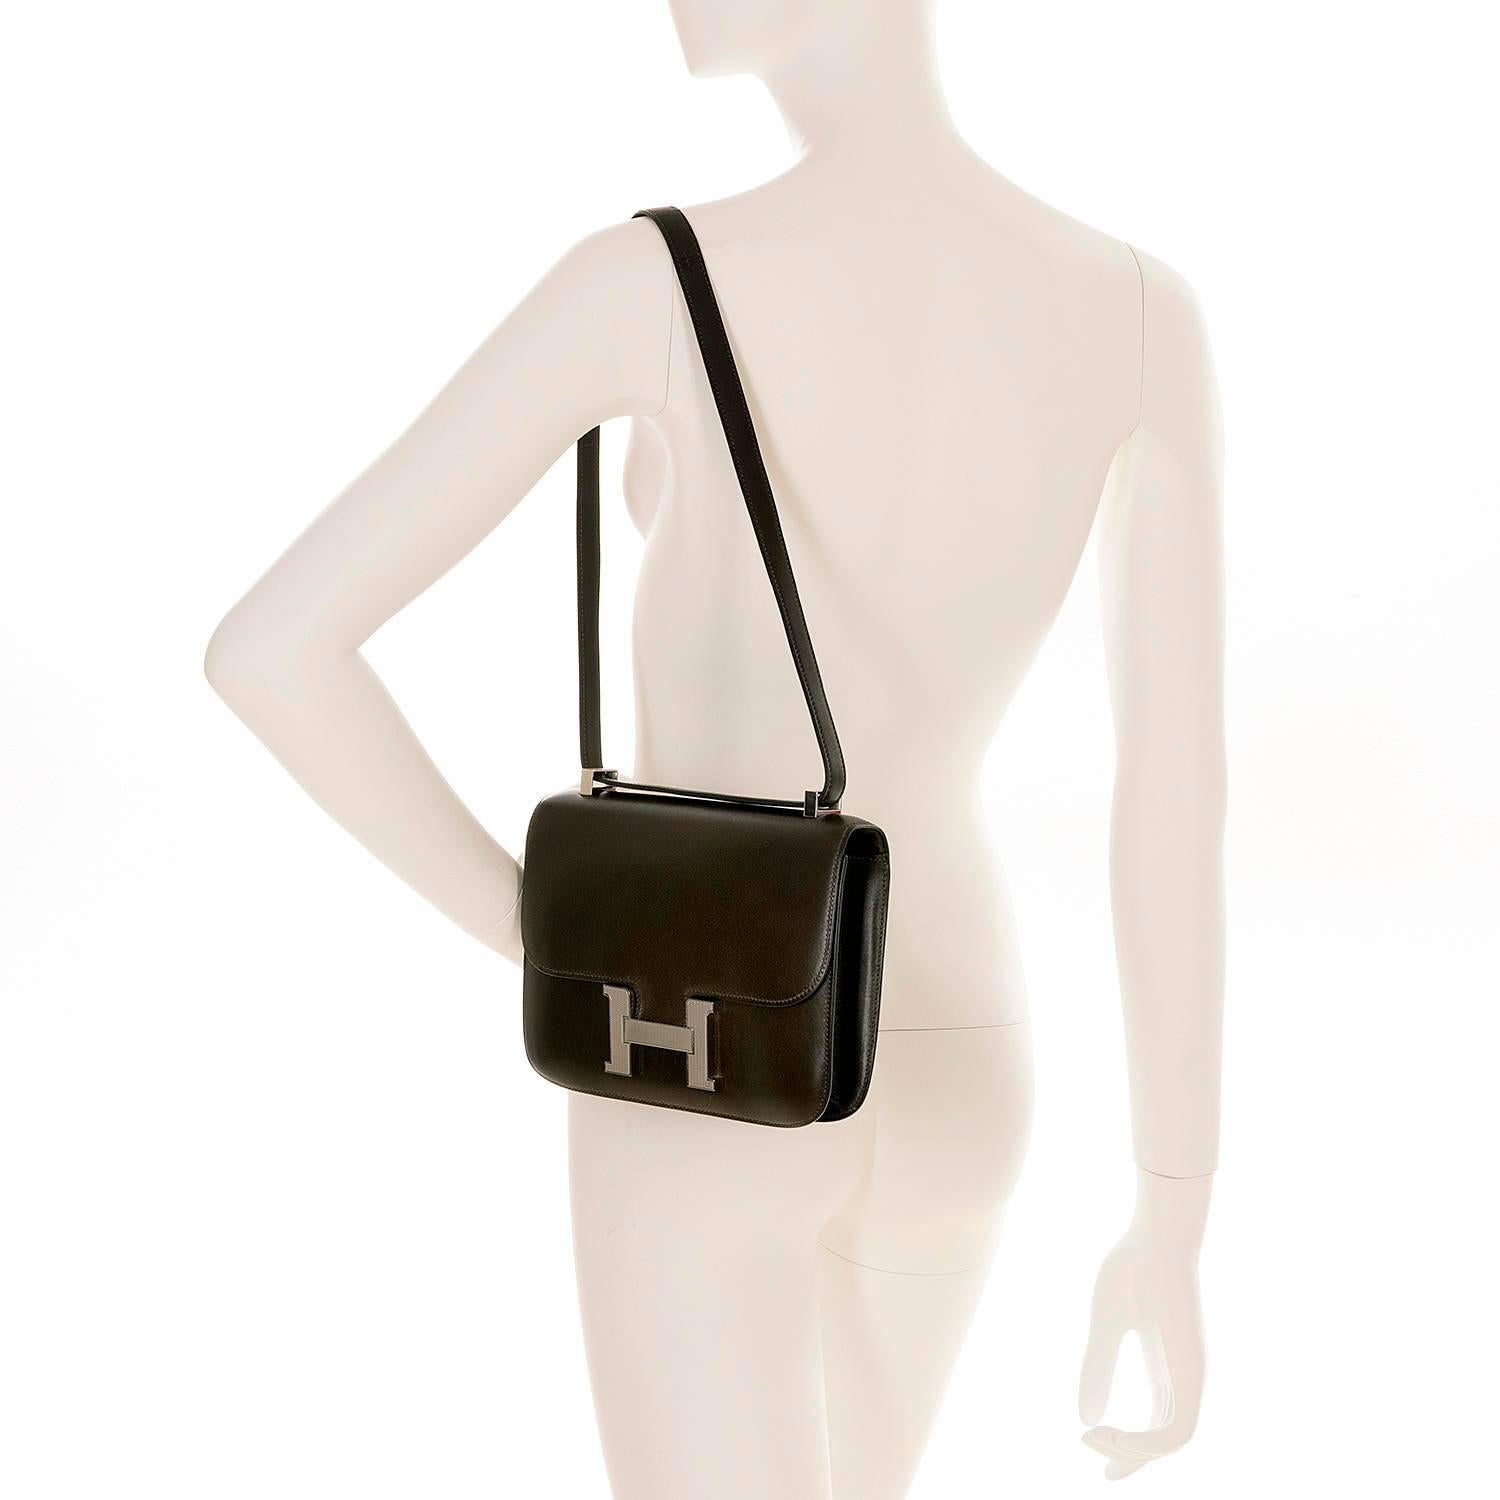  Tres Chic Limited Edition Hermes 23cm Ebene Box Leather Constance Shoulder Bag For Sale 4